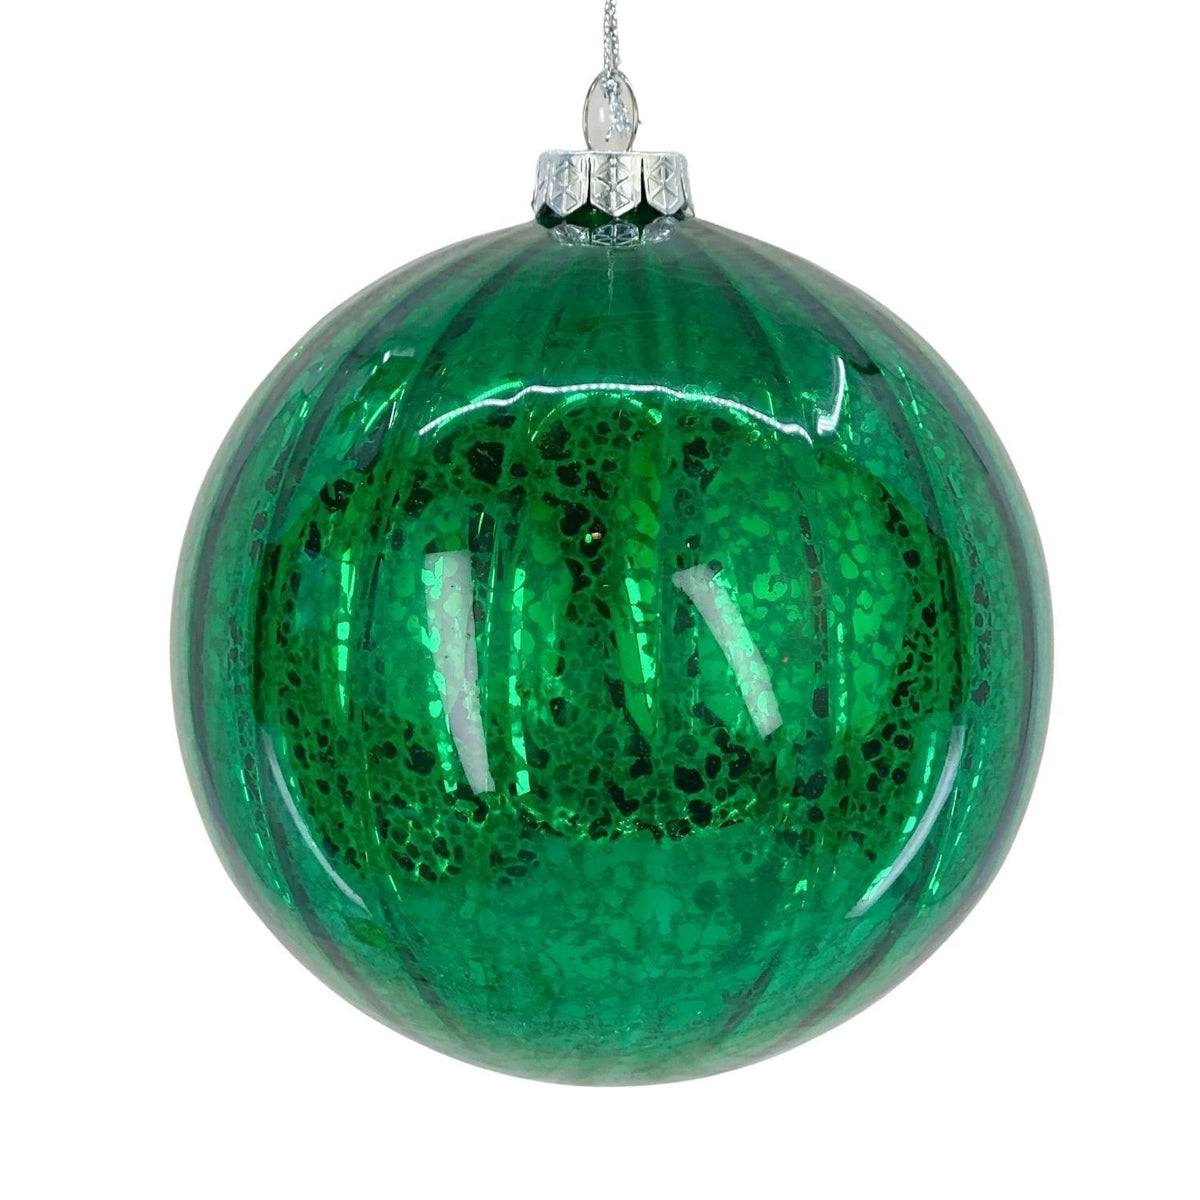 Green Mercury Ball - My Christmas